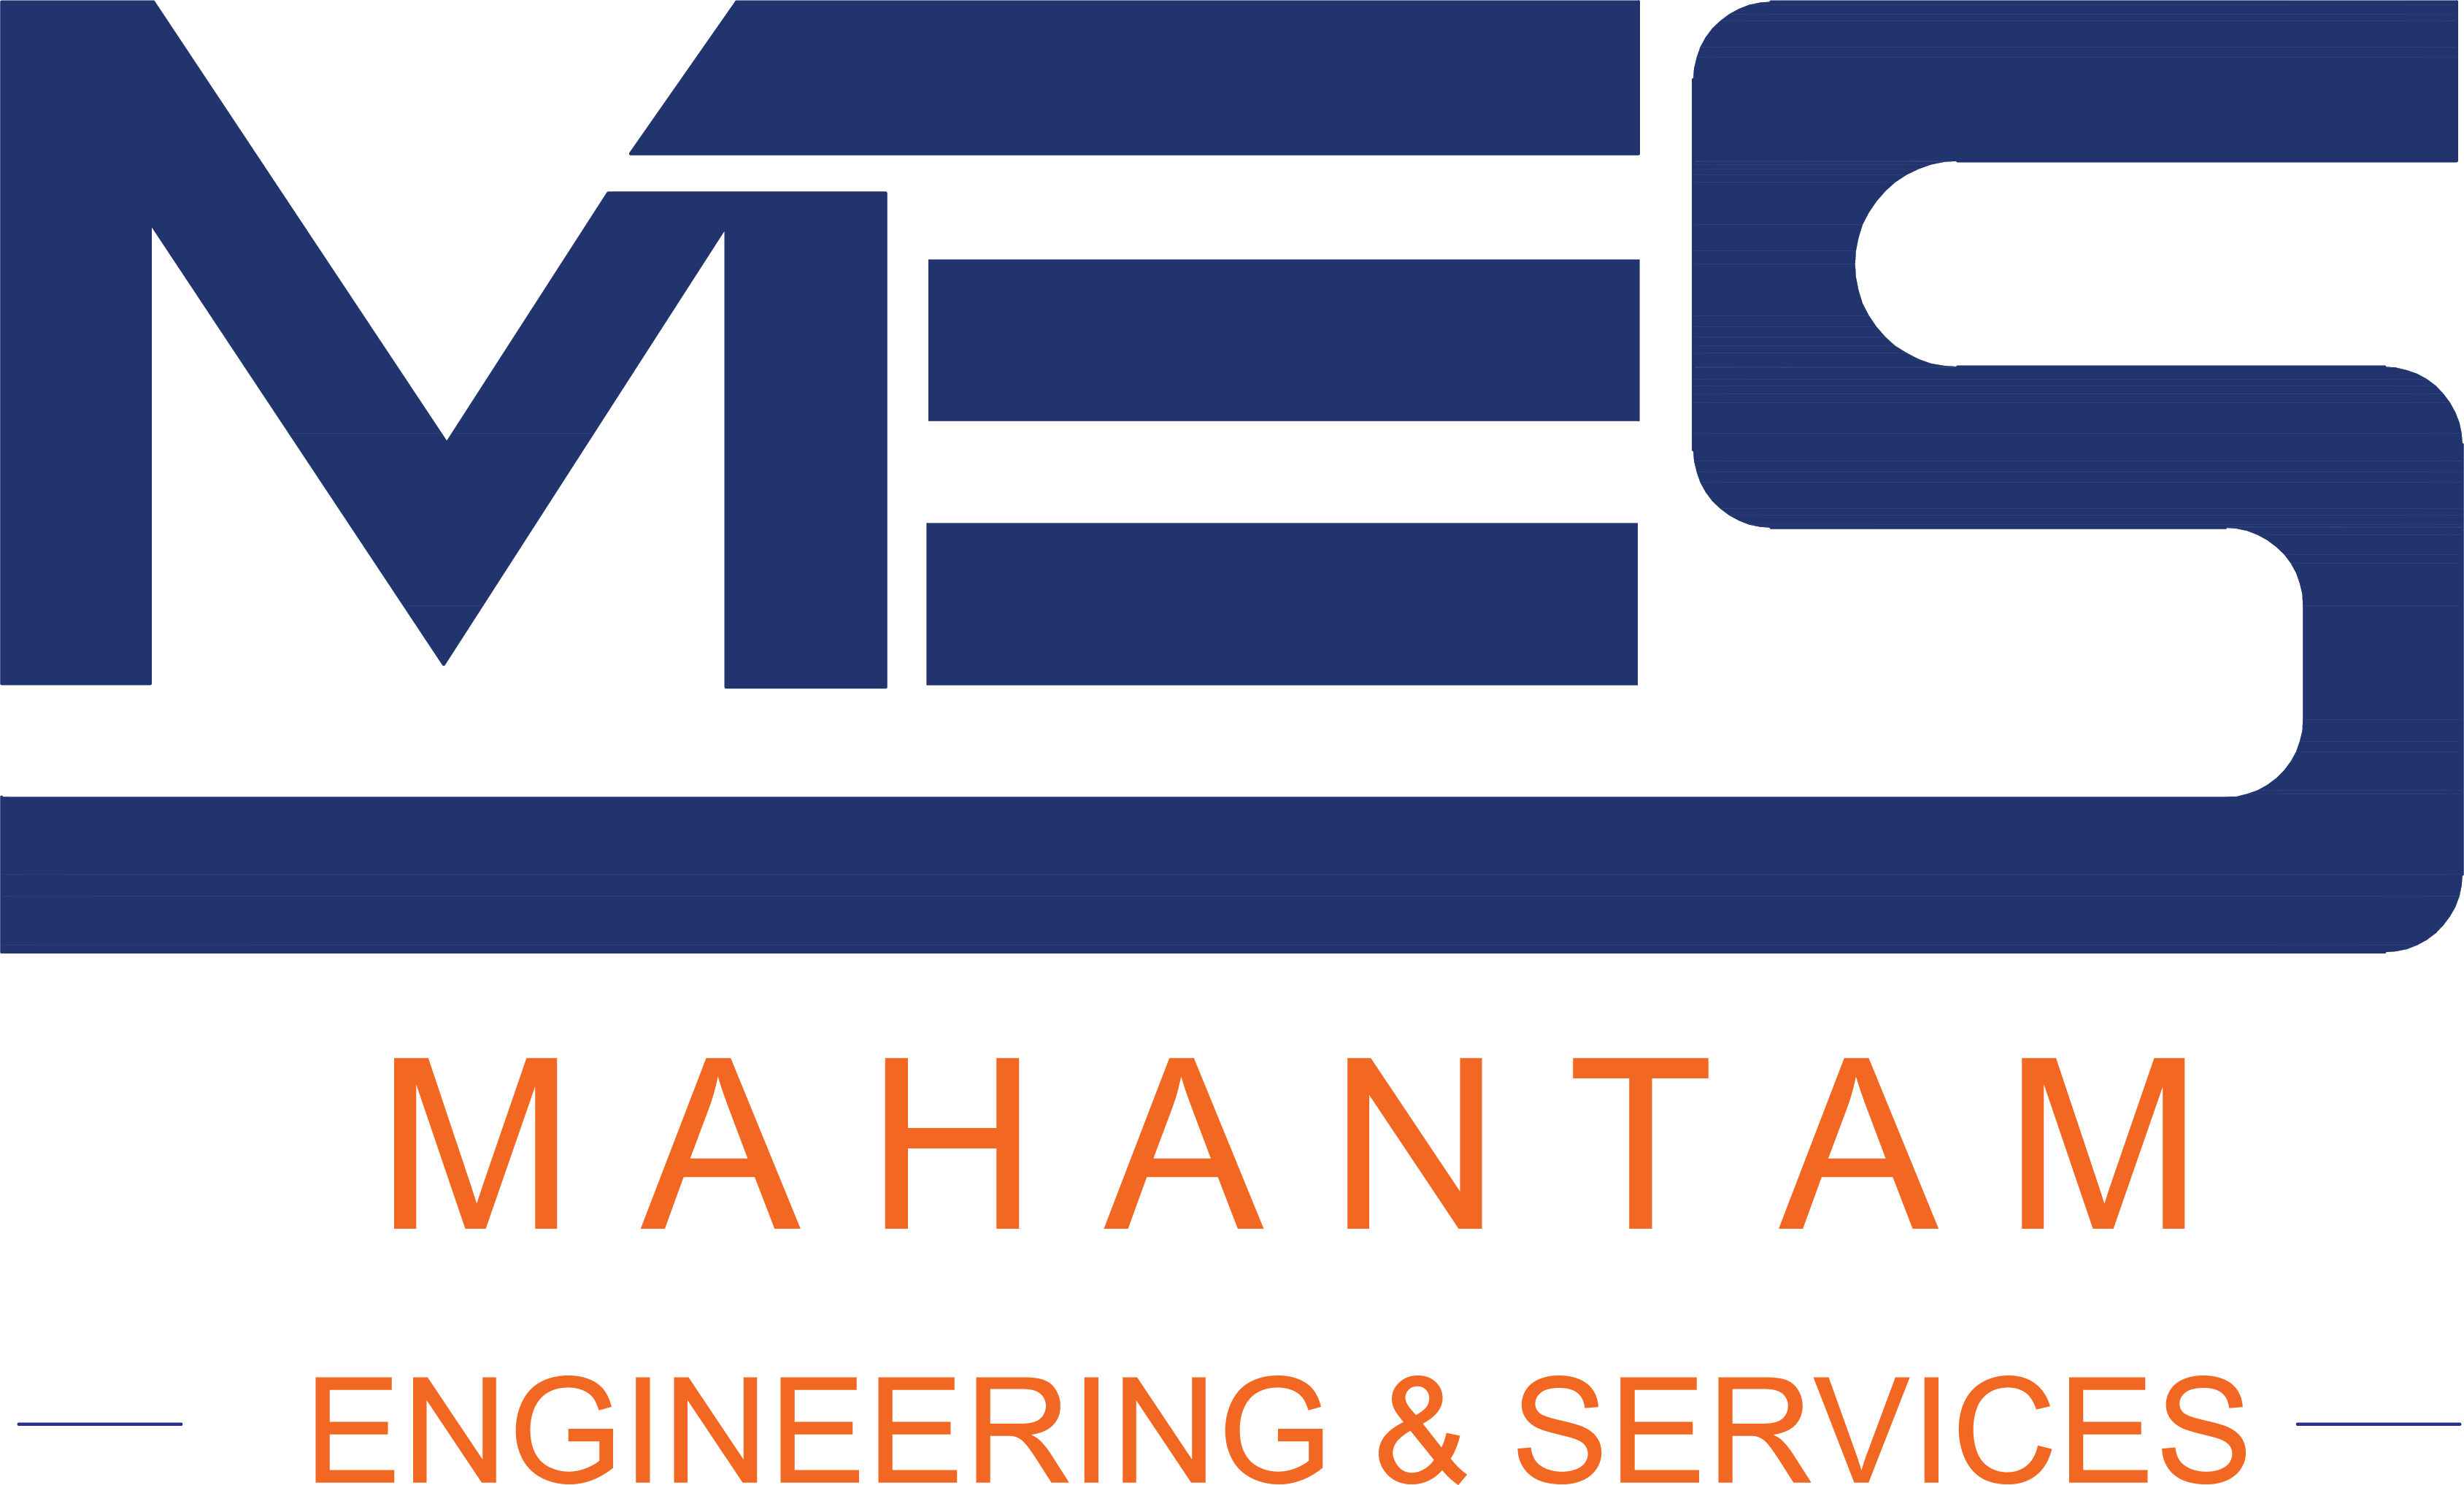 Mahantam Engineering & Services